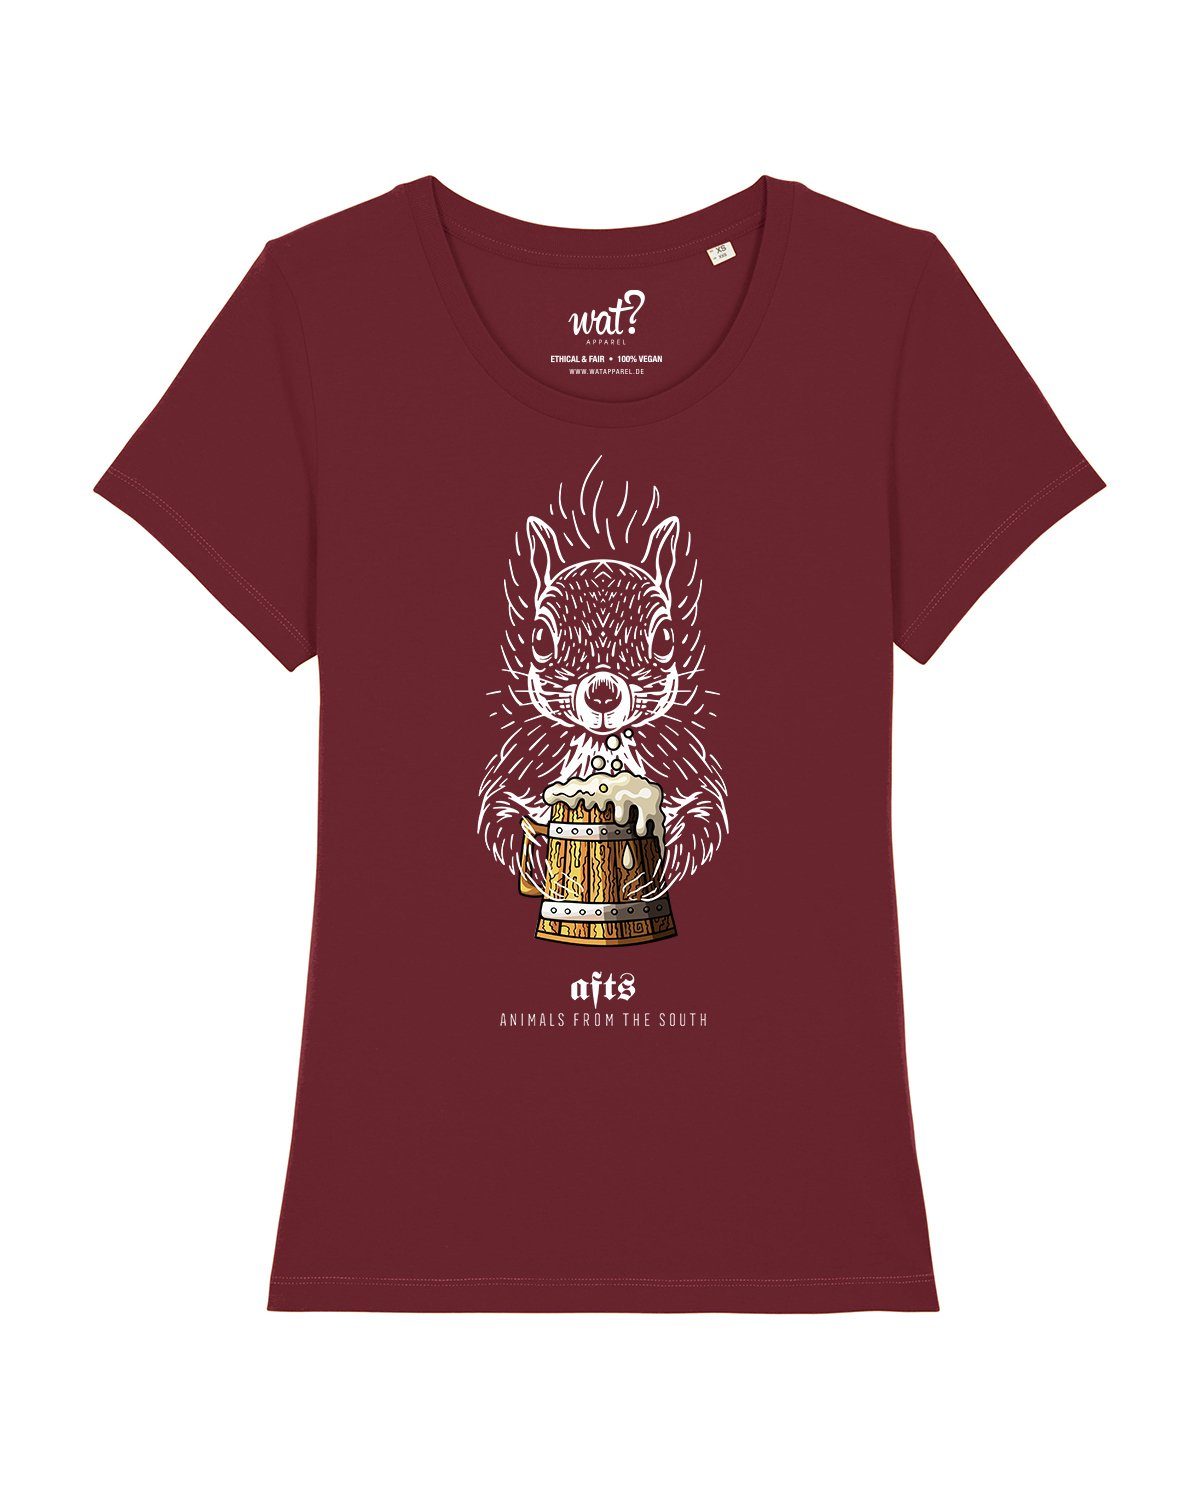 Apparel (1-tlg) [#afts] weinrot Eichhörnchen Print-Shirt wat?